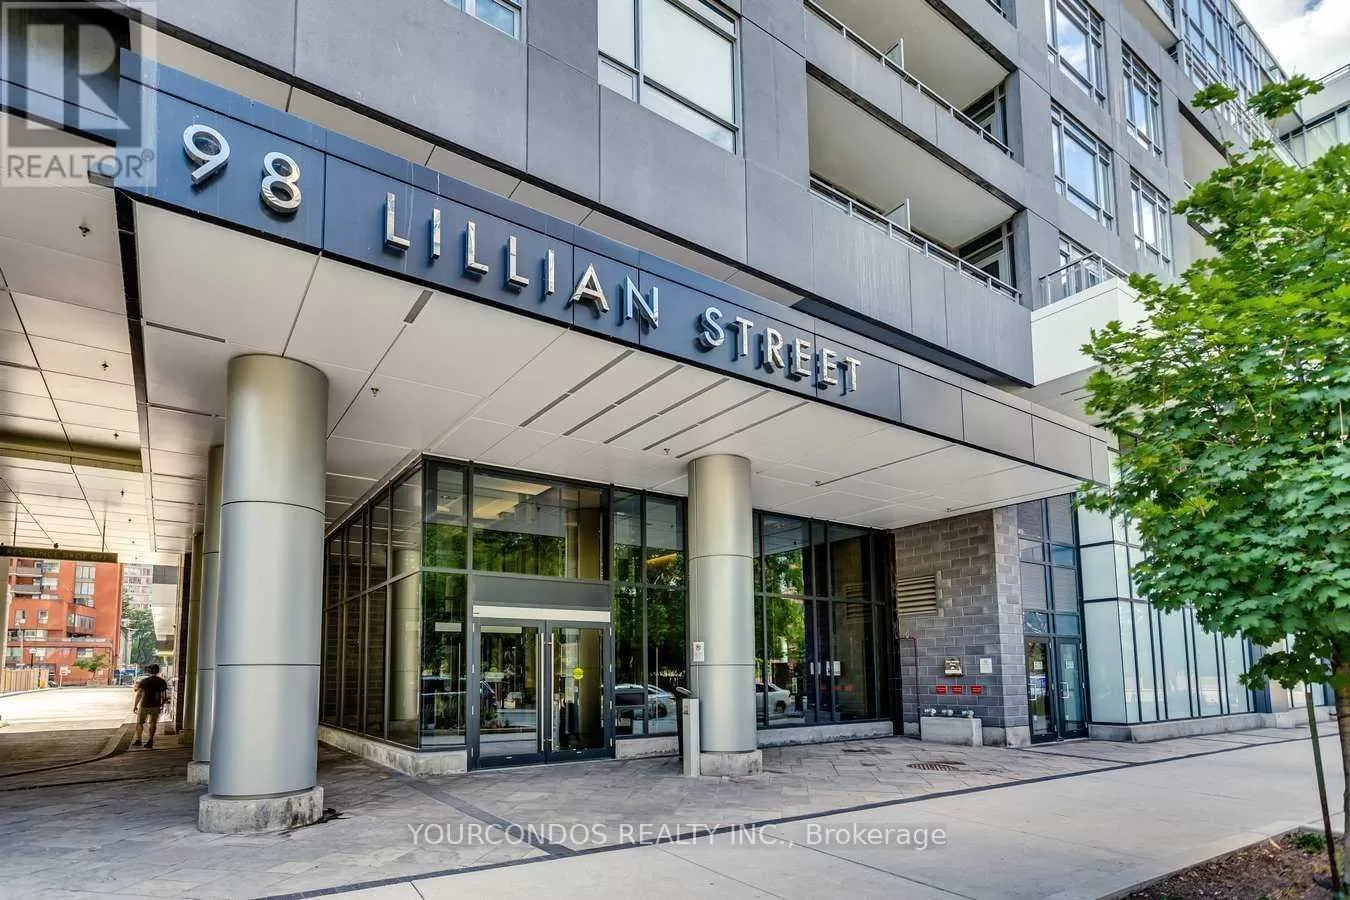 Apartment for rent: 420 - 98 Lillian Street, Toronto, Ontario M4S 0A5